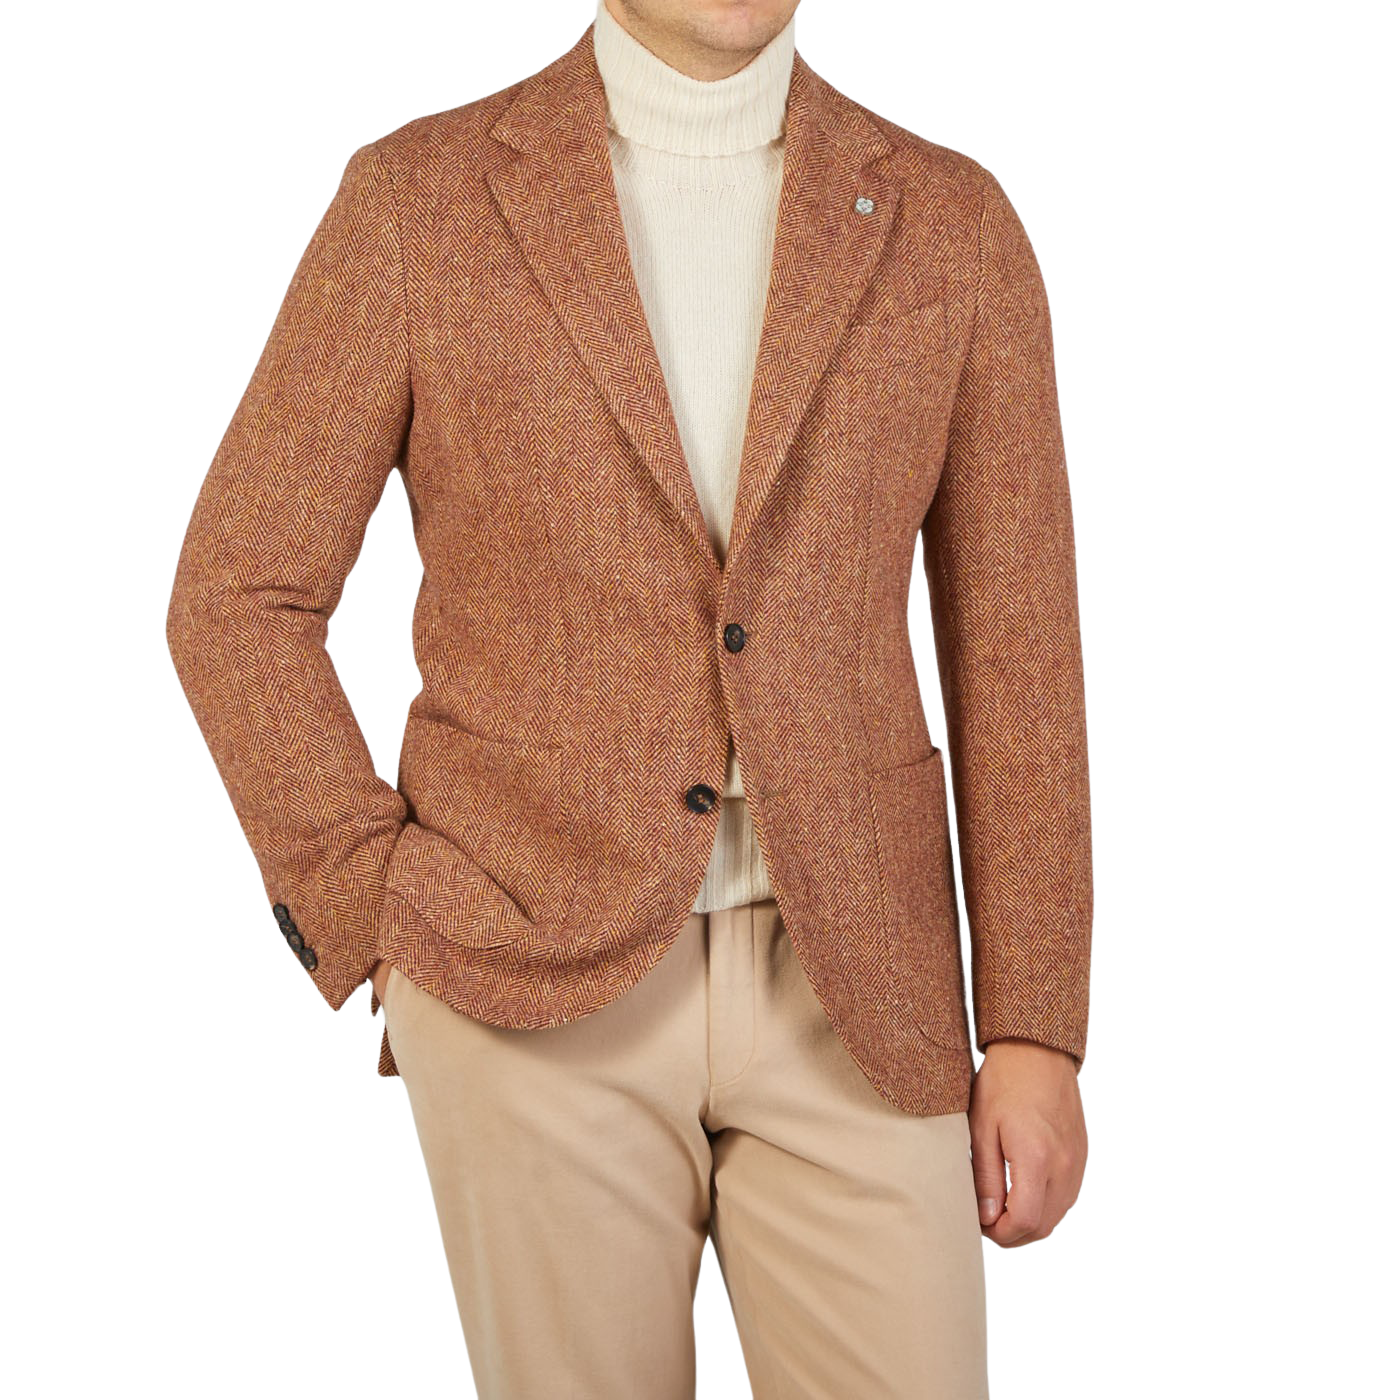 A man wearing a Studio 73 Orange Herringbone Wool Tweed Blazer and tan pants.